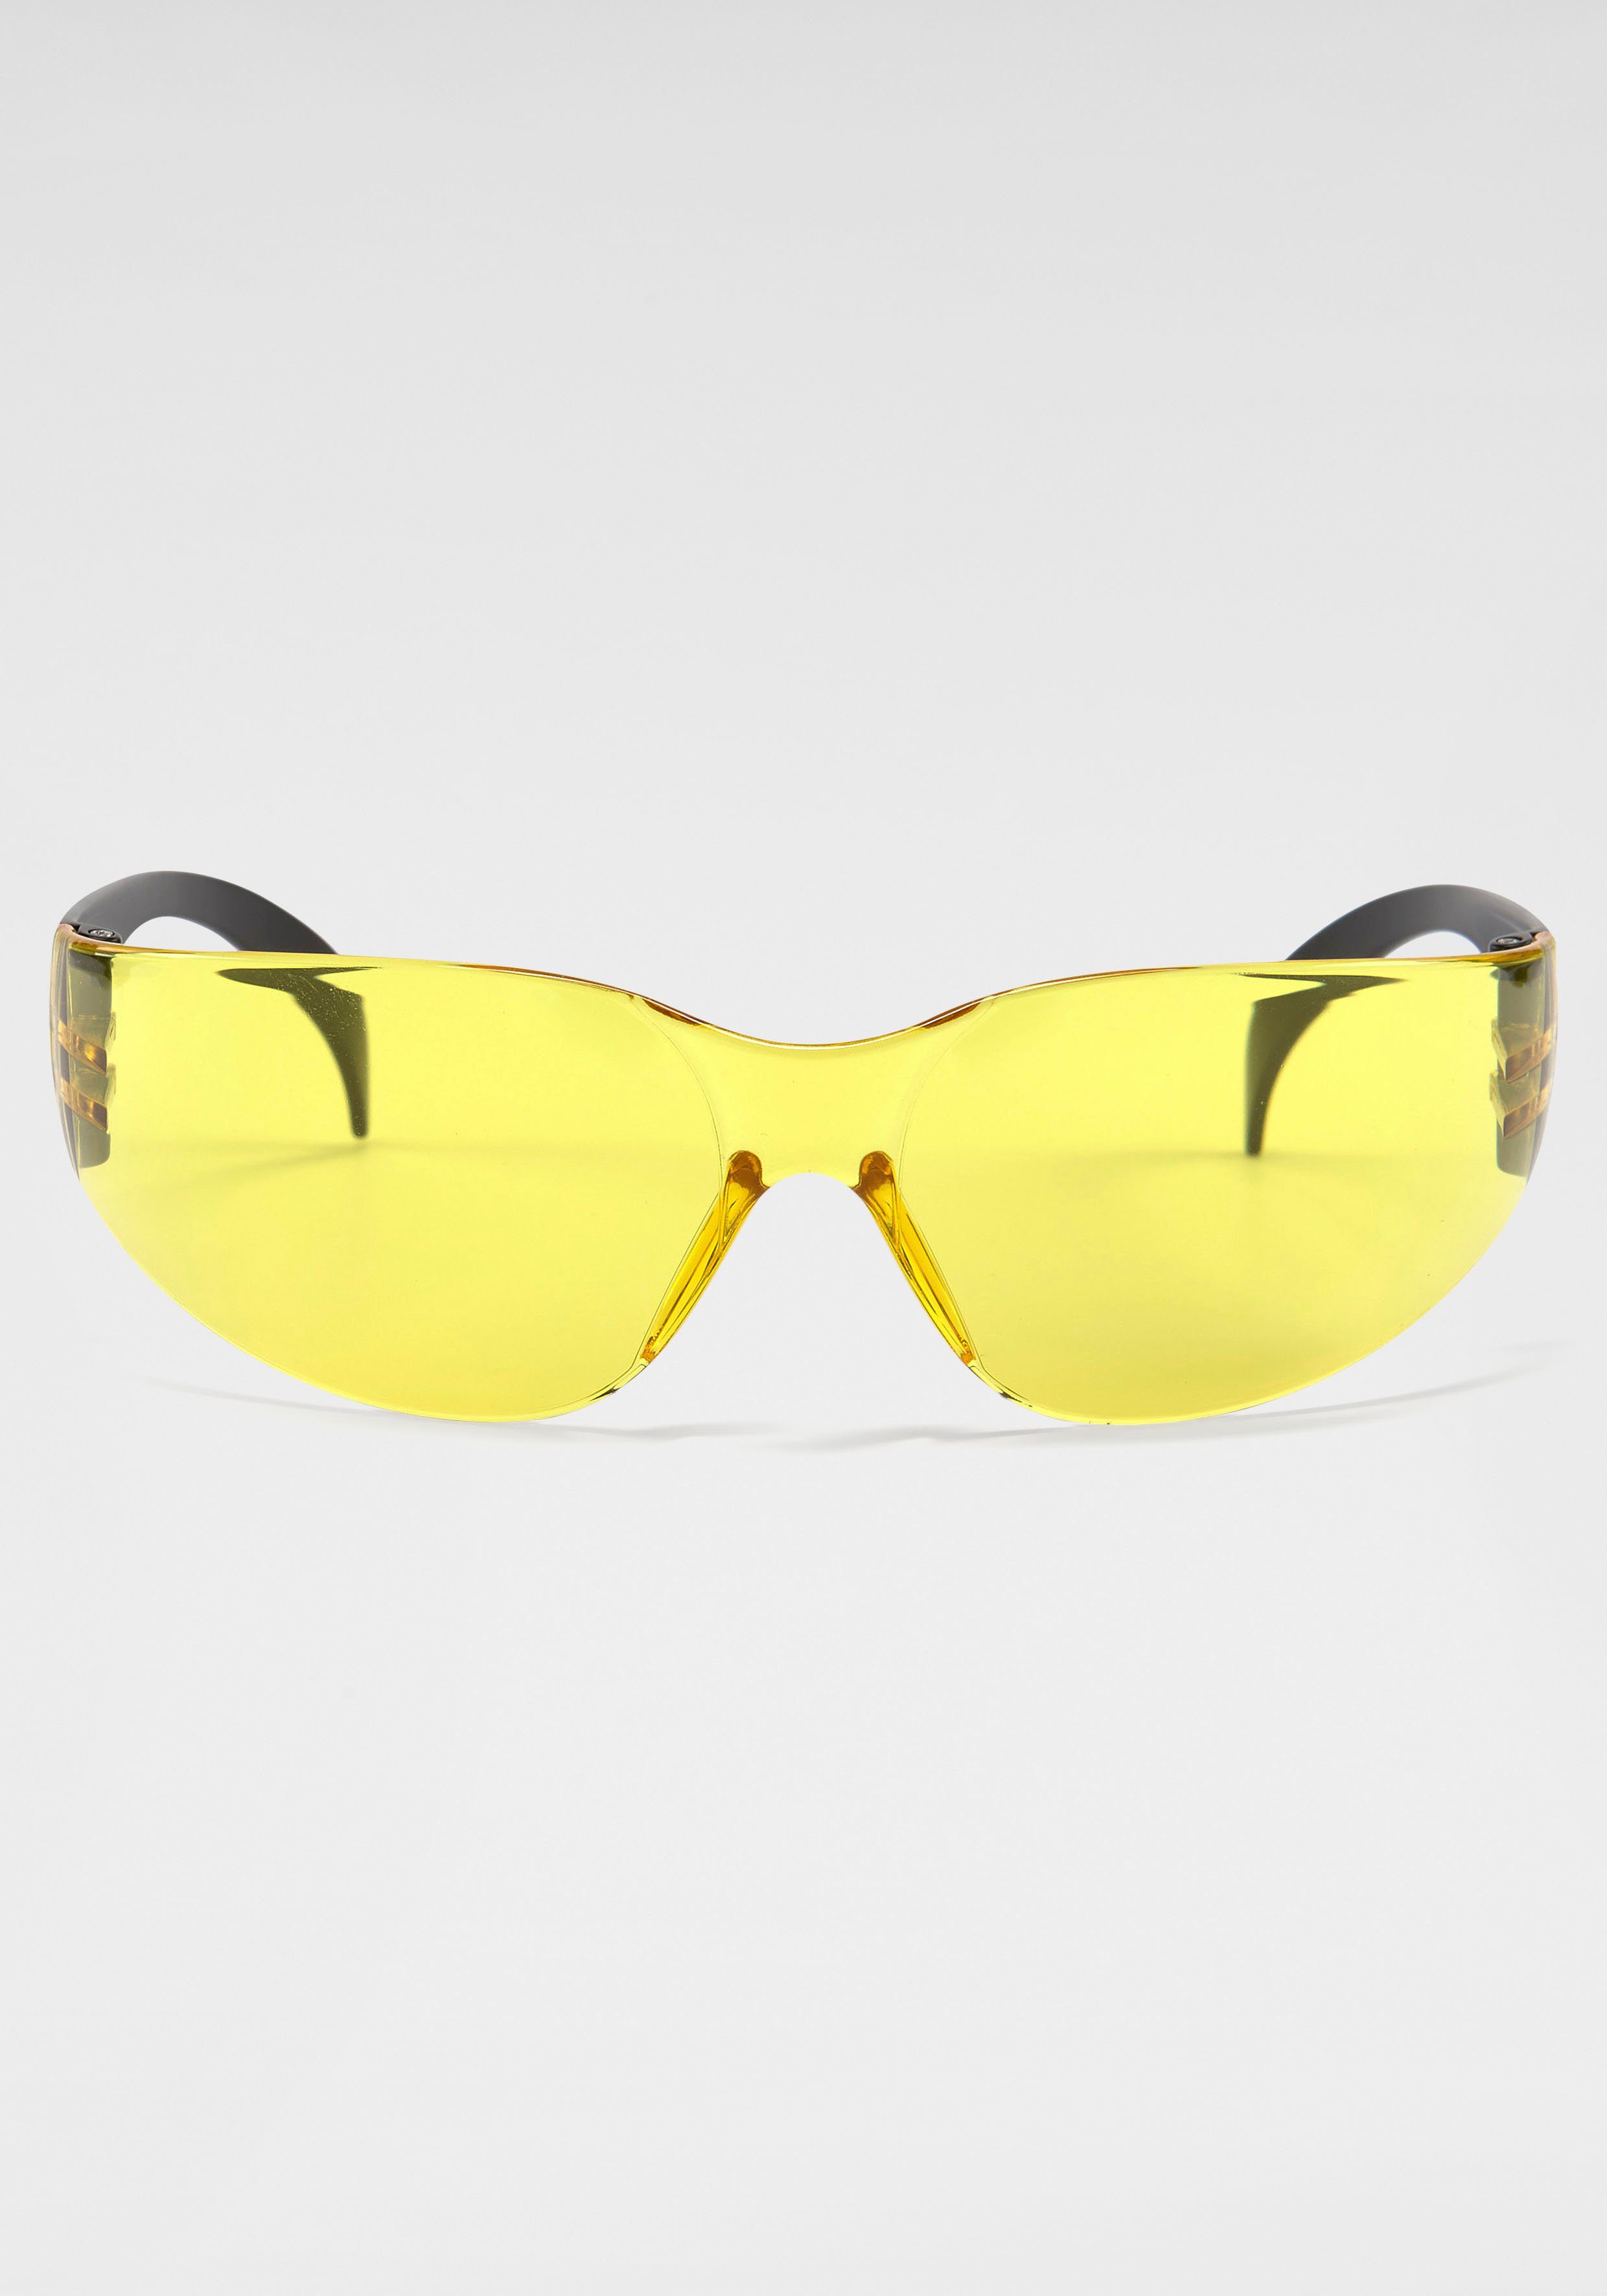 BACK IN BLACK Eyewear Randlos gelb Sonnenbrille